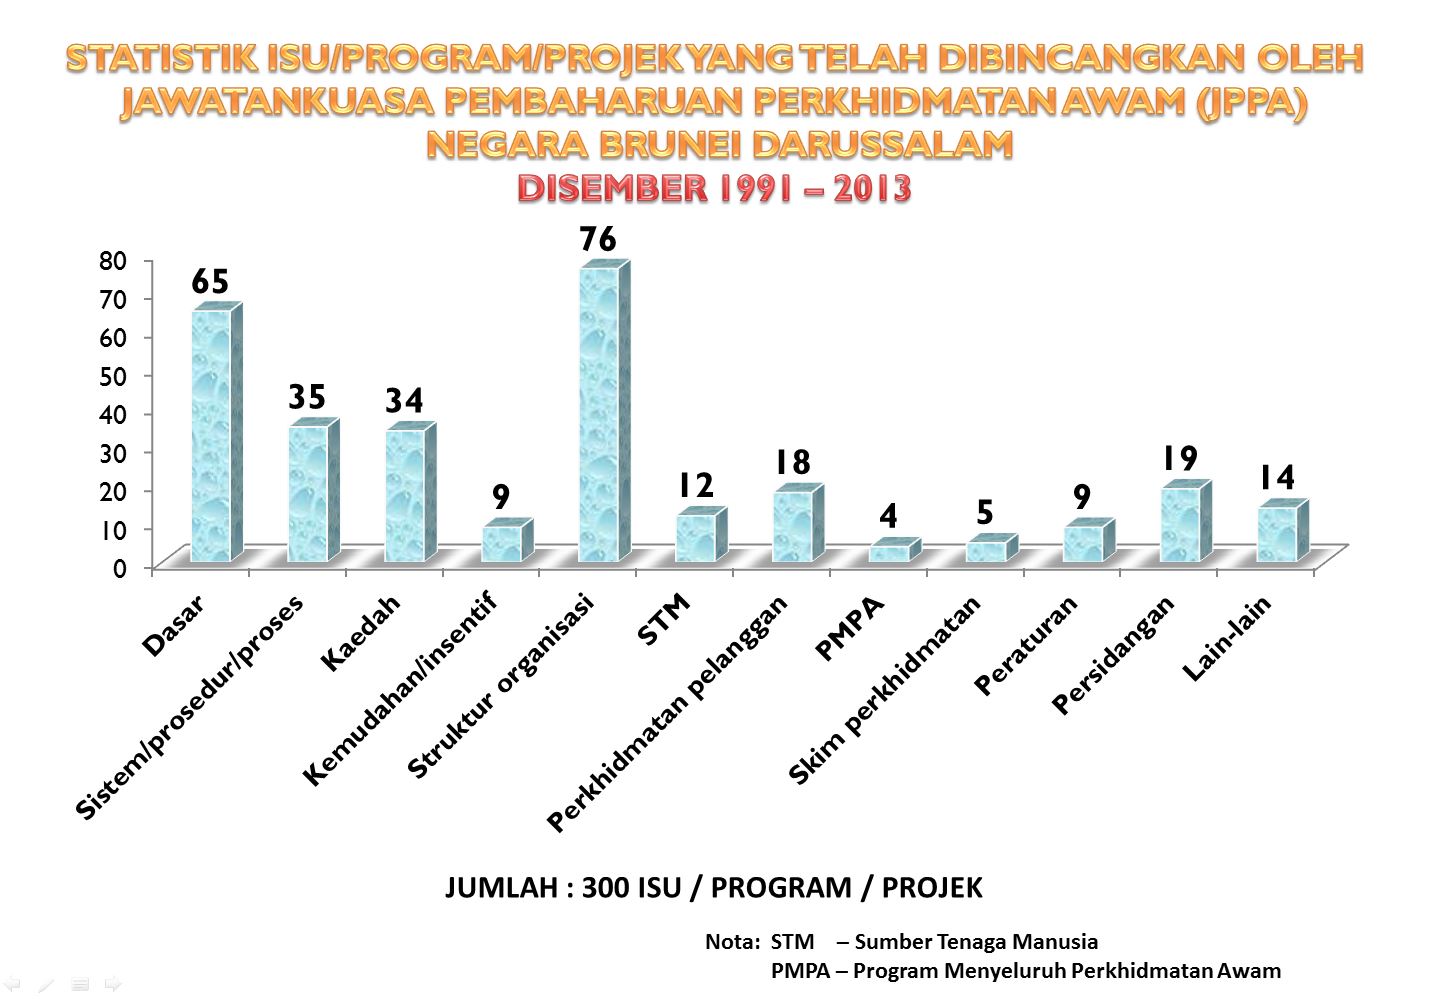 JPPA STATISTIC 2013